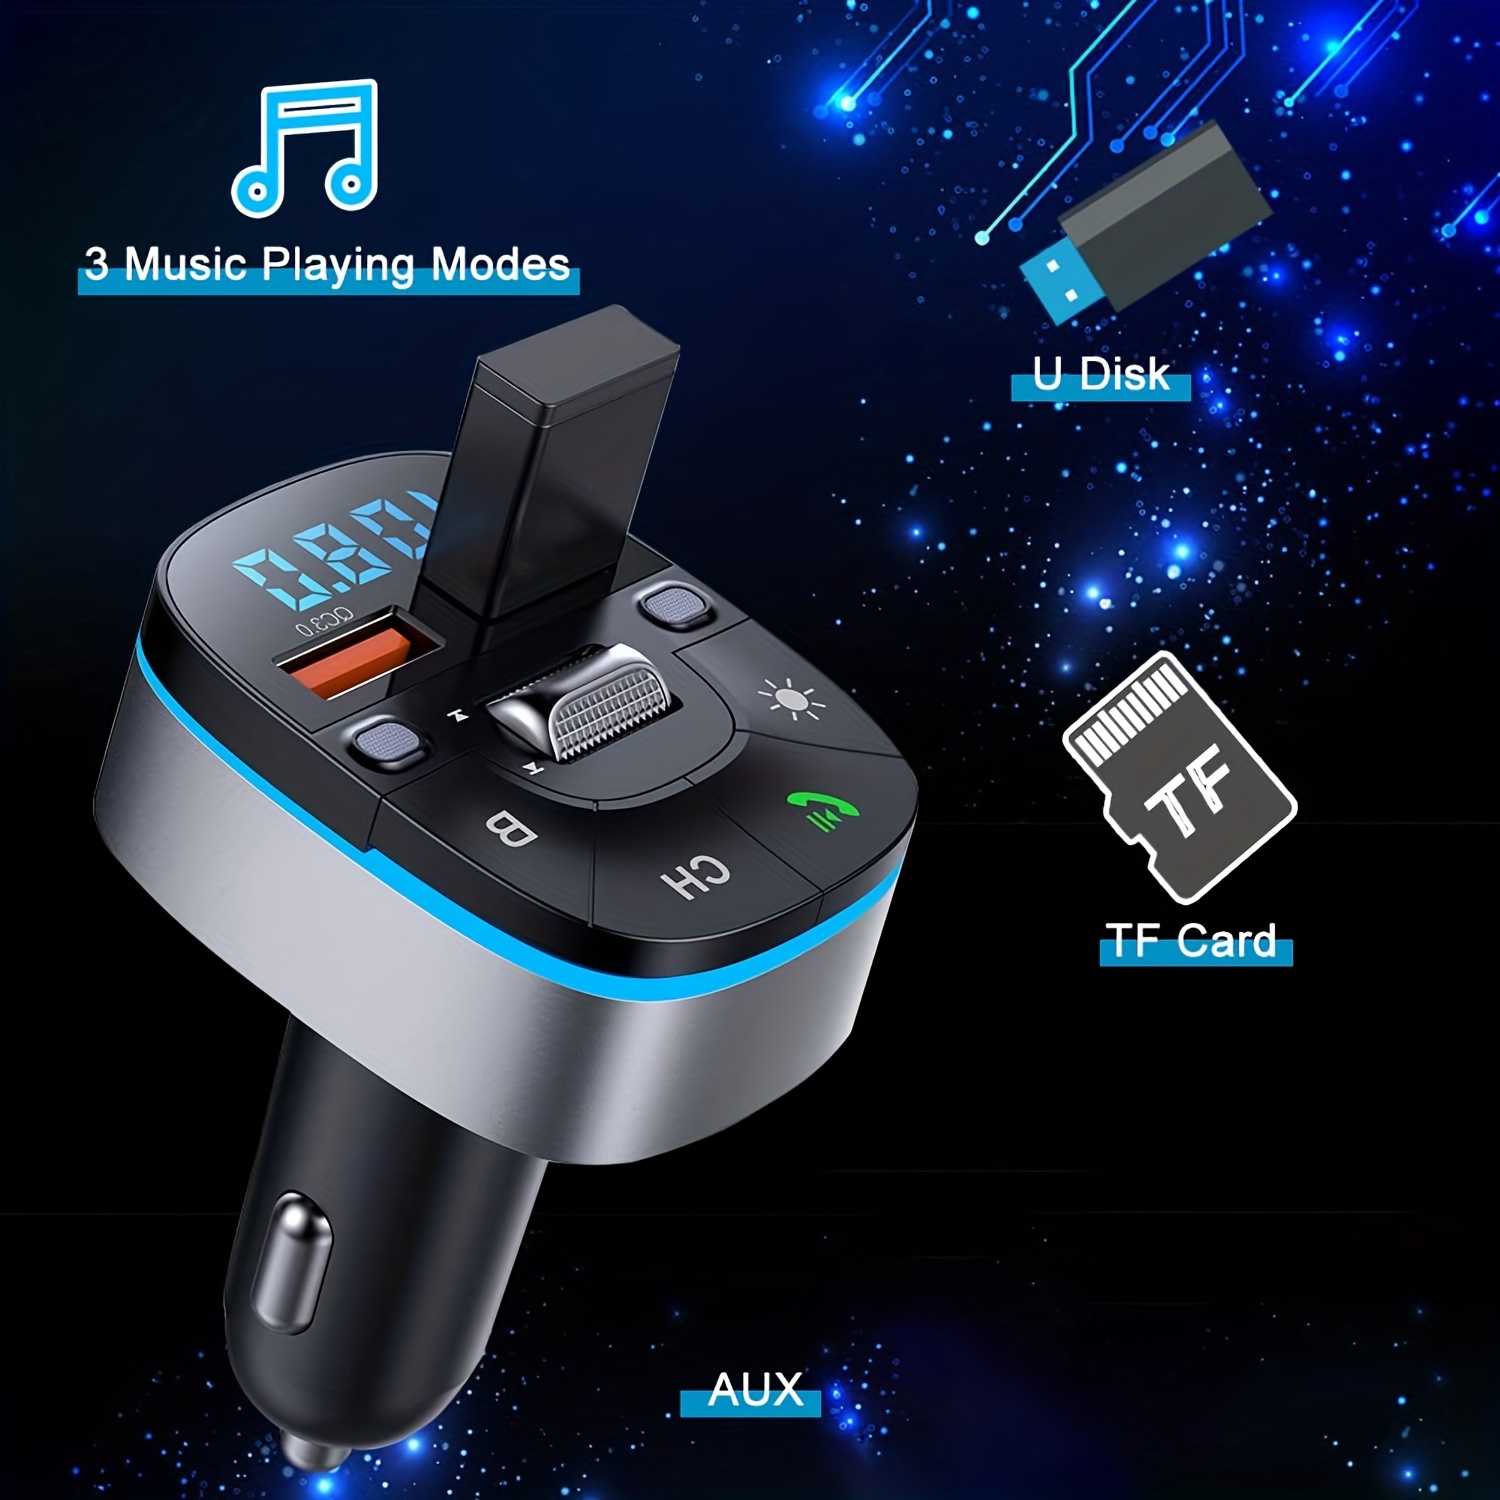 Cheap Car Wireless Bluetooth AUX Adapter HIFI Stereo Audio Music